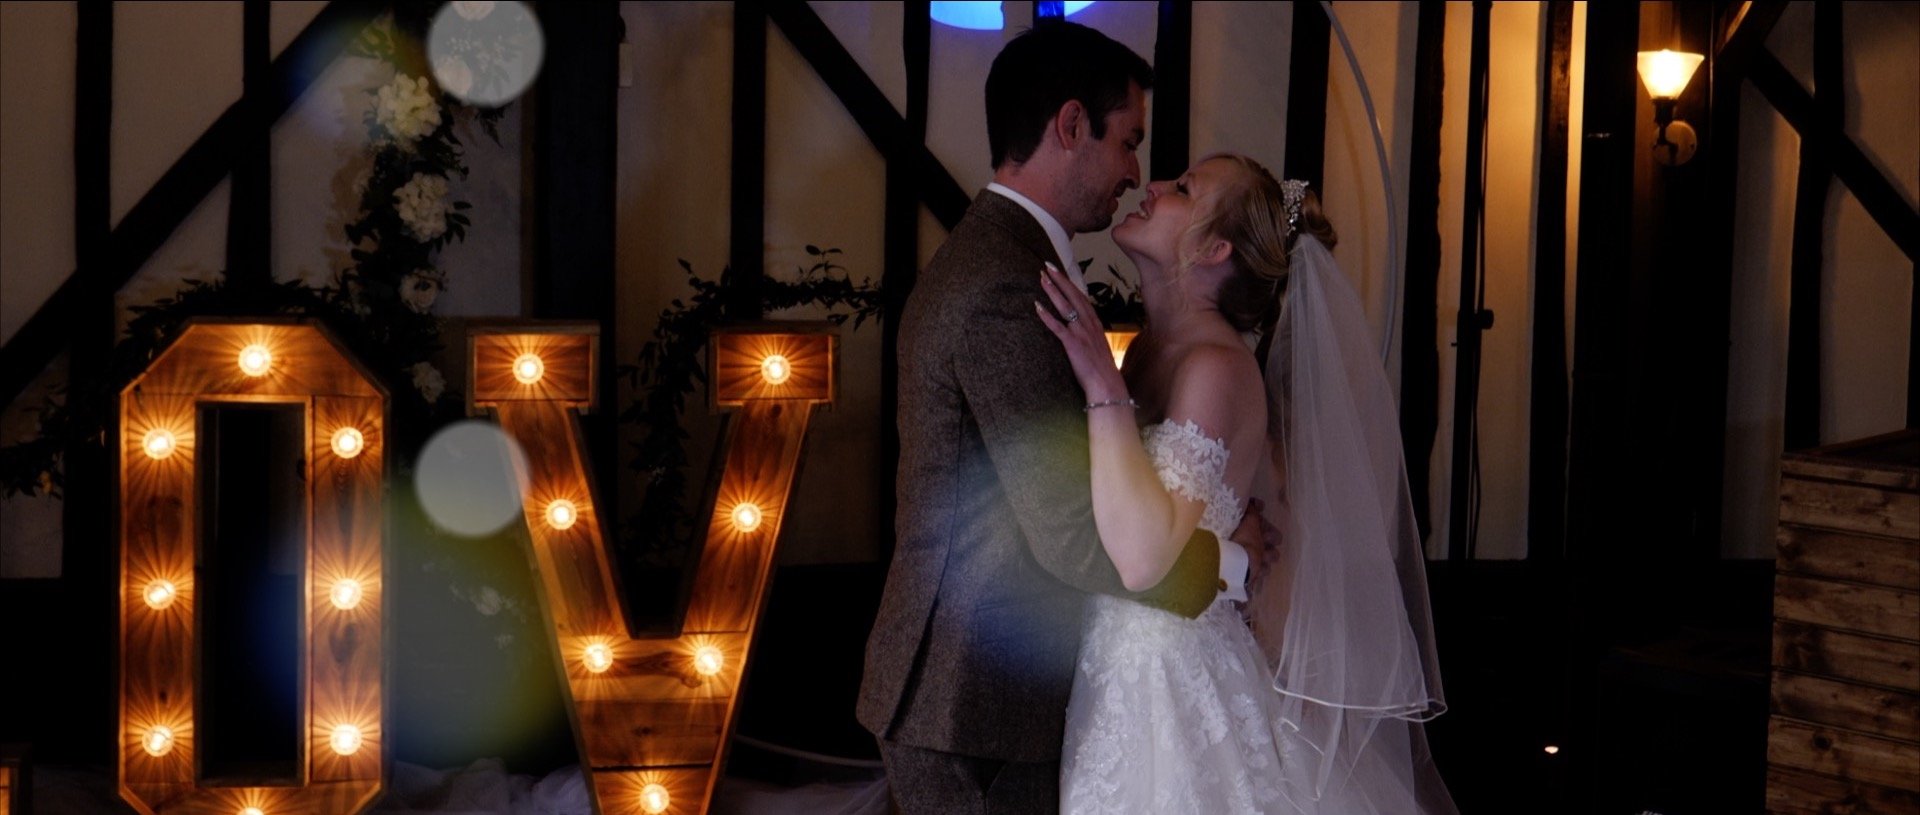 The First Dance Essex wedding videos 3 Cheers Media.jpg